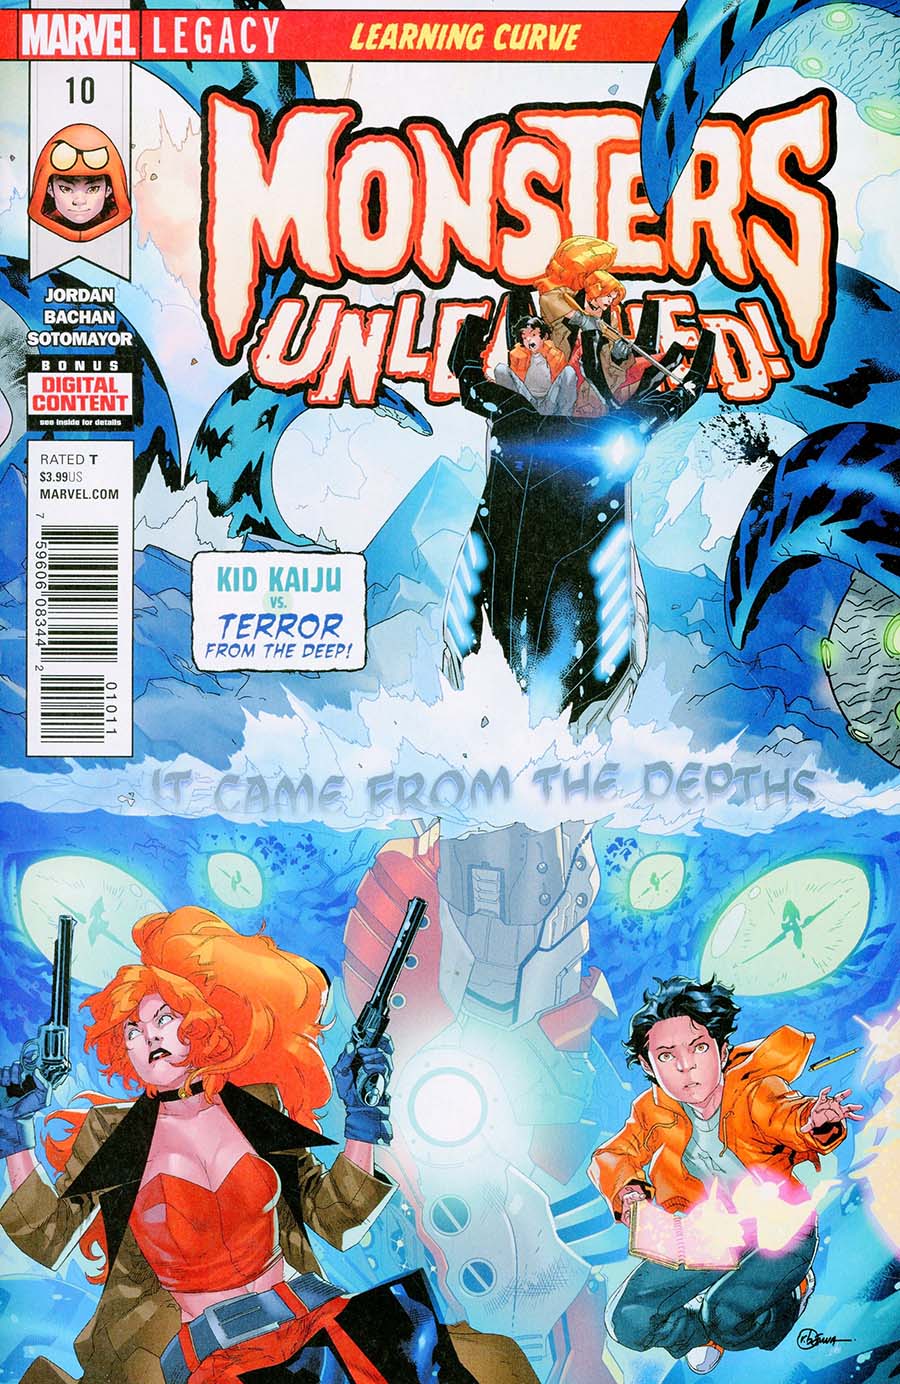 Monsters Unleashed Vol 2 #10 (Marvel Legacy Tie-In)